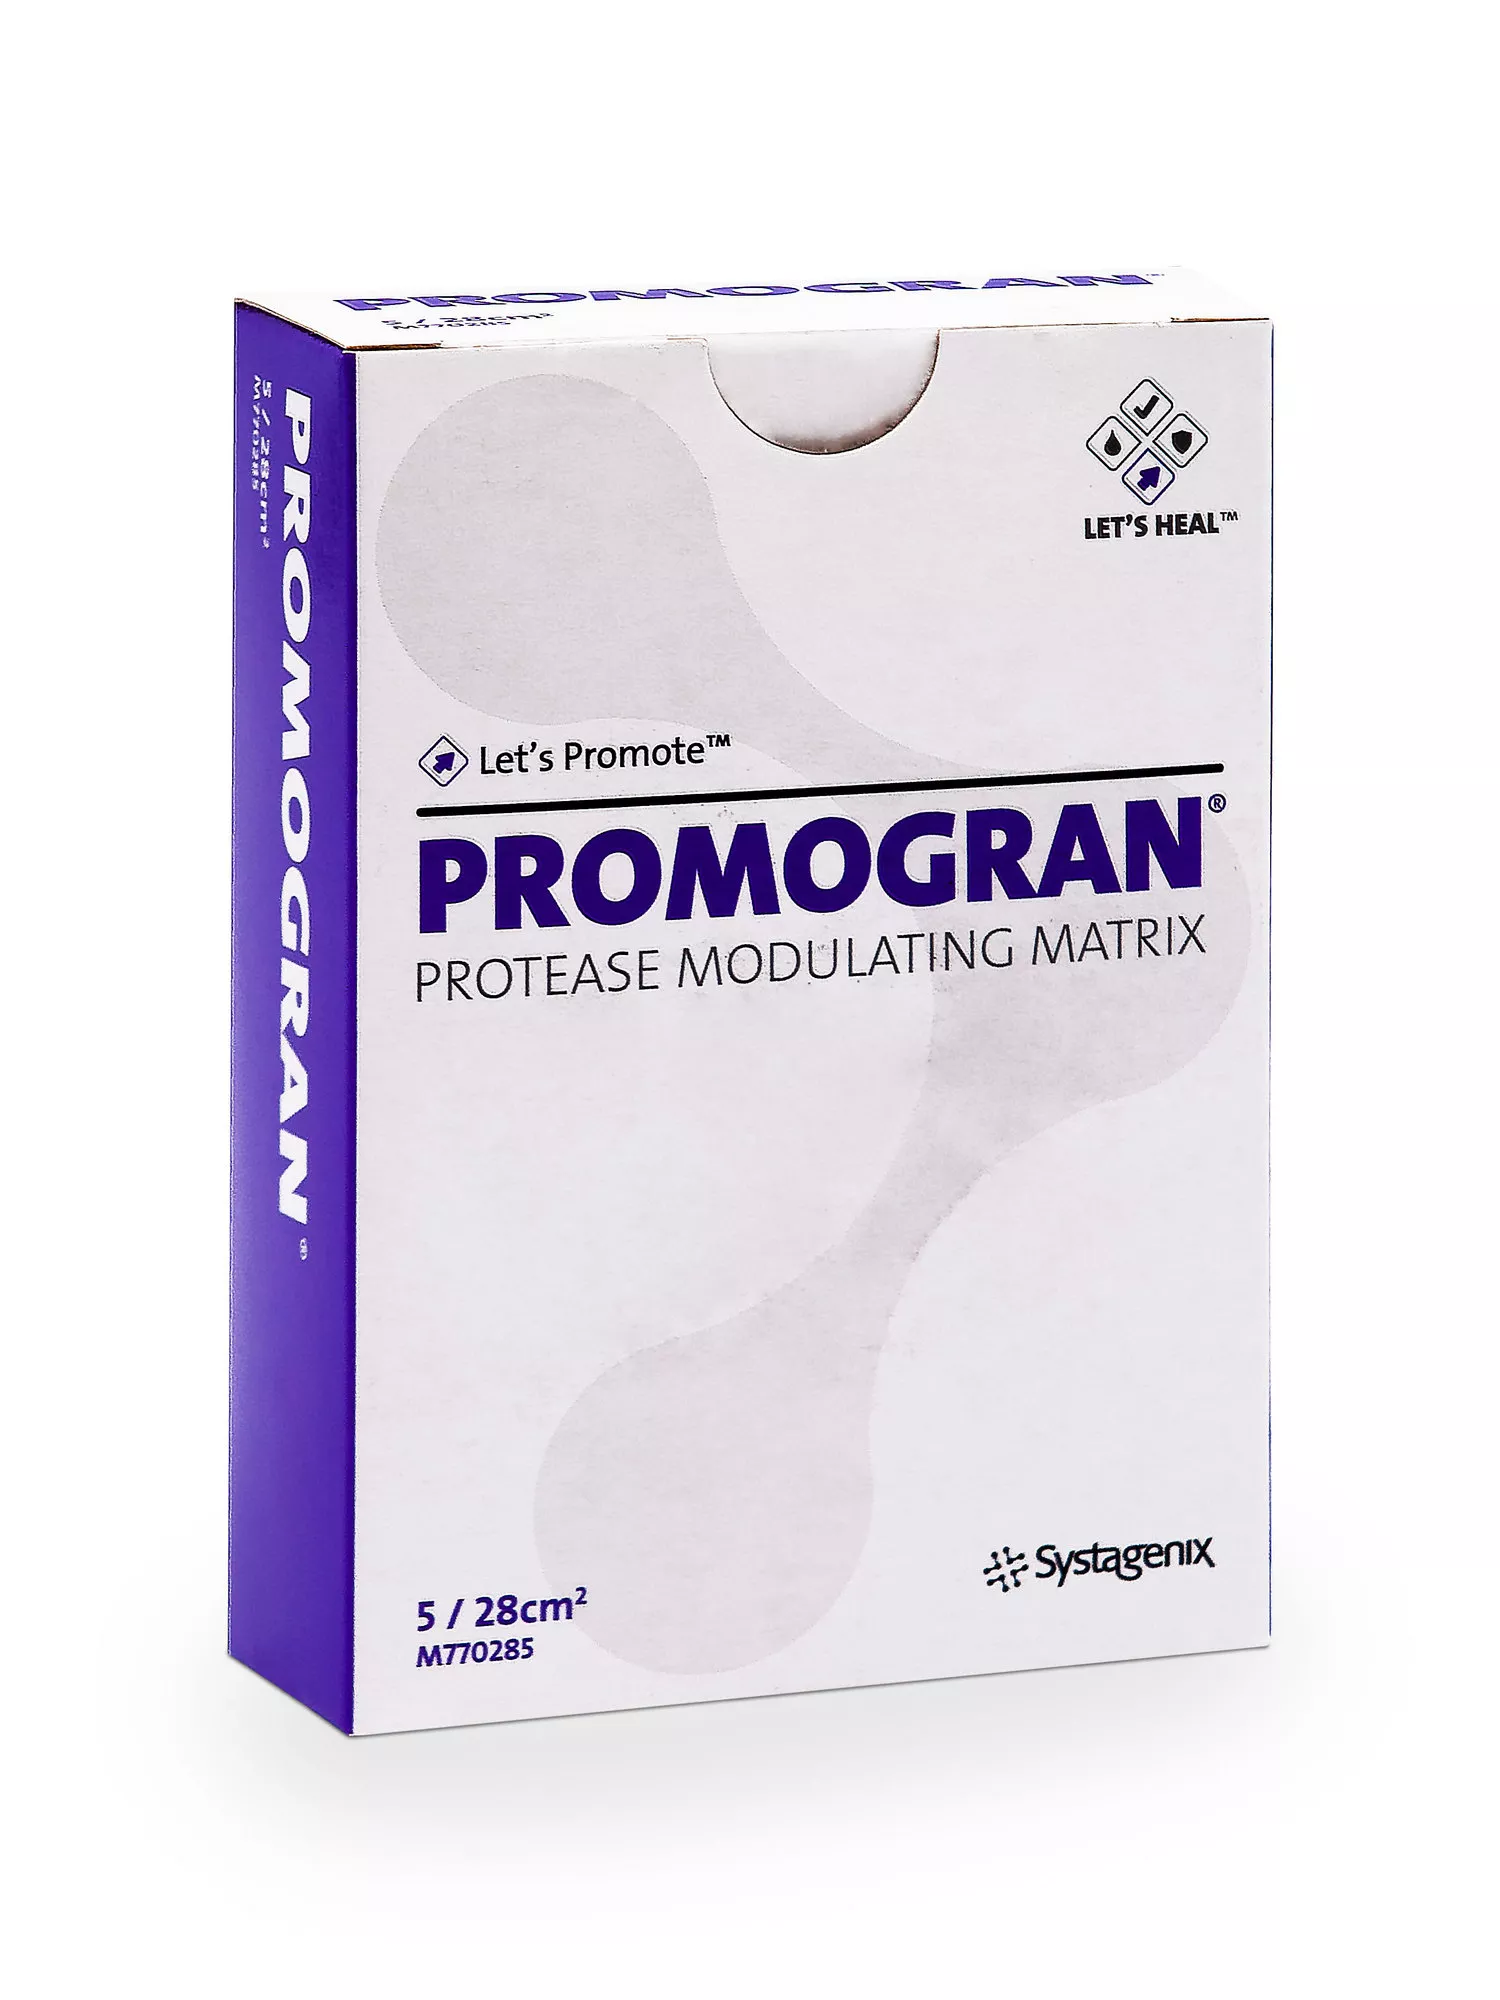 Promogran Prisma Matrix, PS2028DE, 28 cm² Tamponaden, steril, 5 Stück